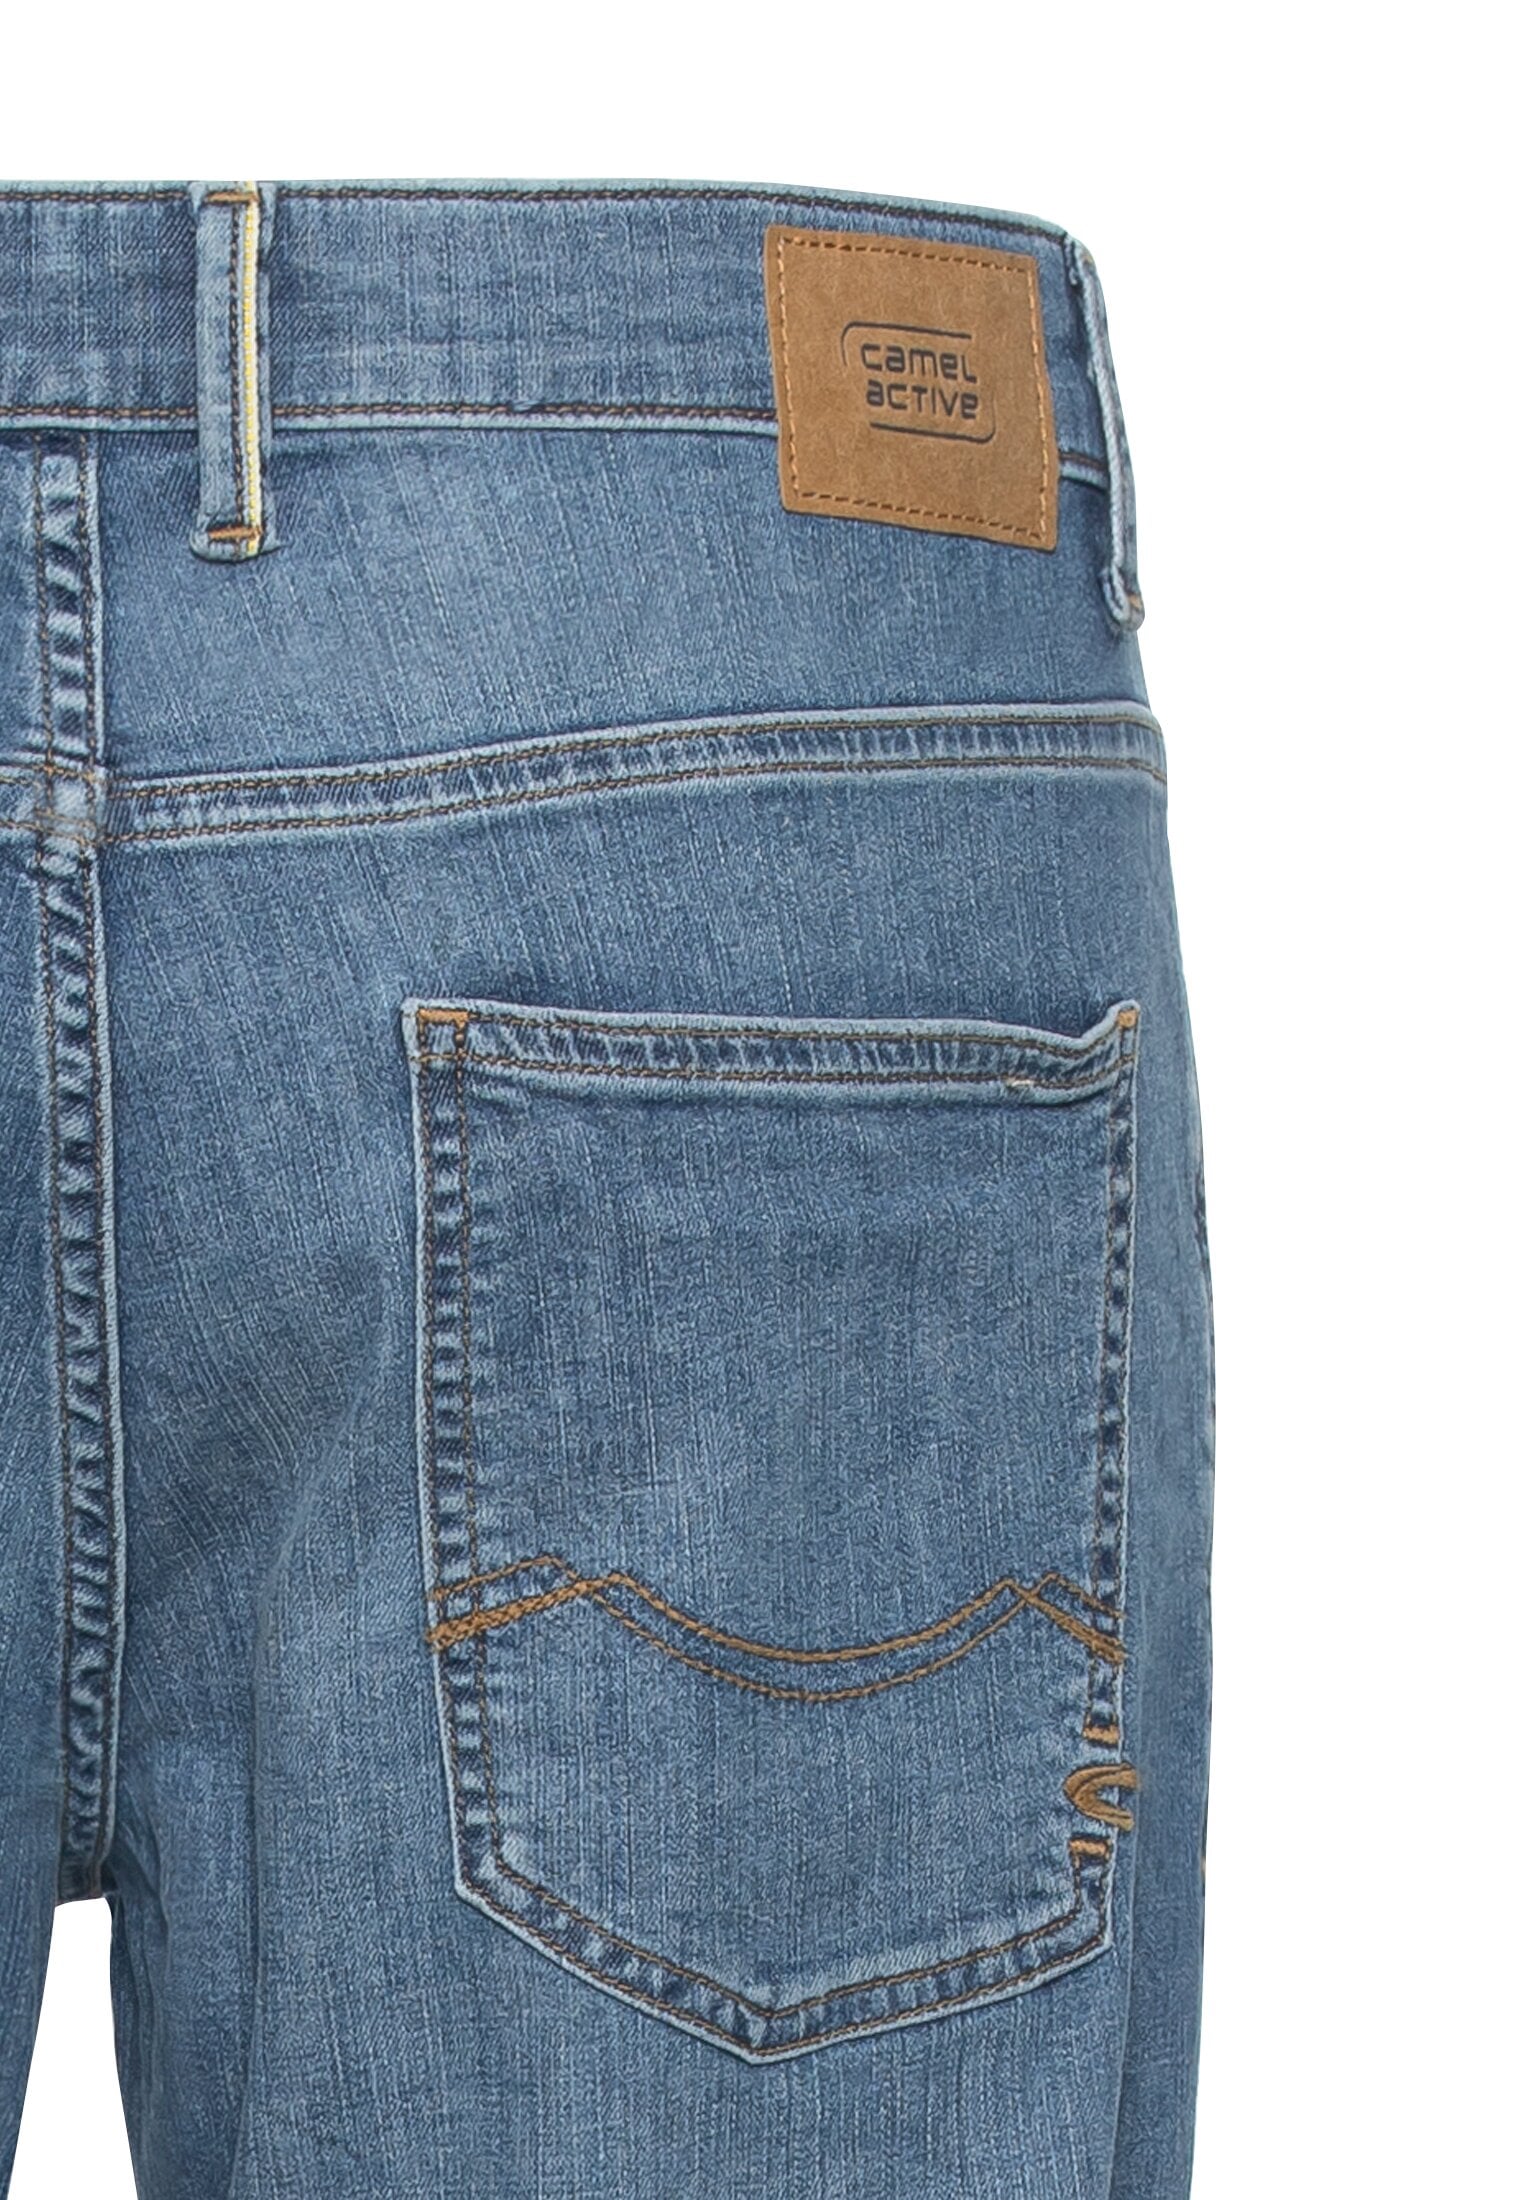 camel active 5-Pocket-Jeans, mit washed Look